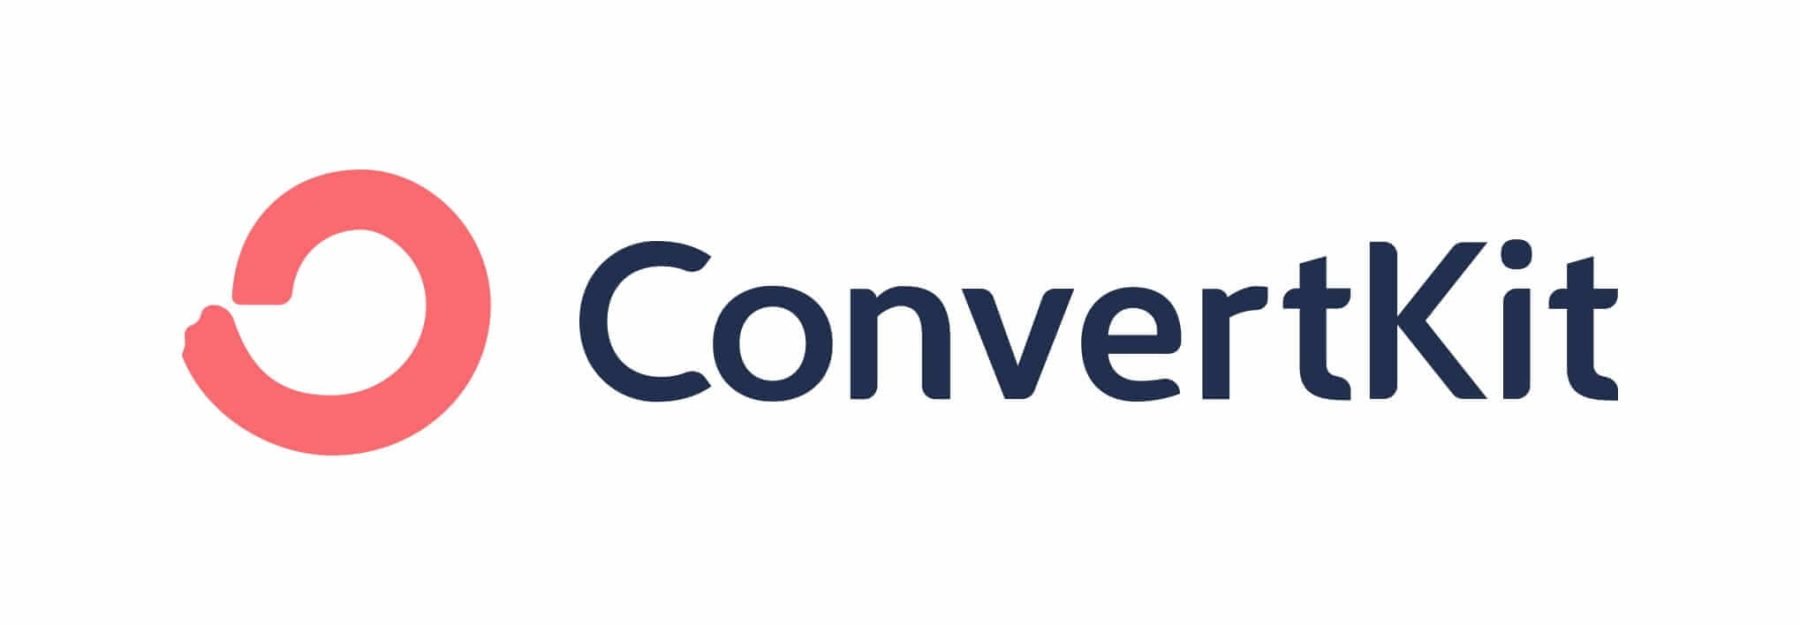 marca do logotipo do convertkit